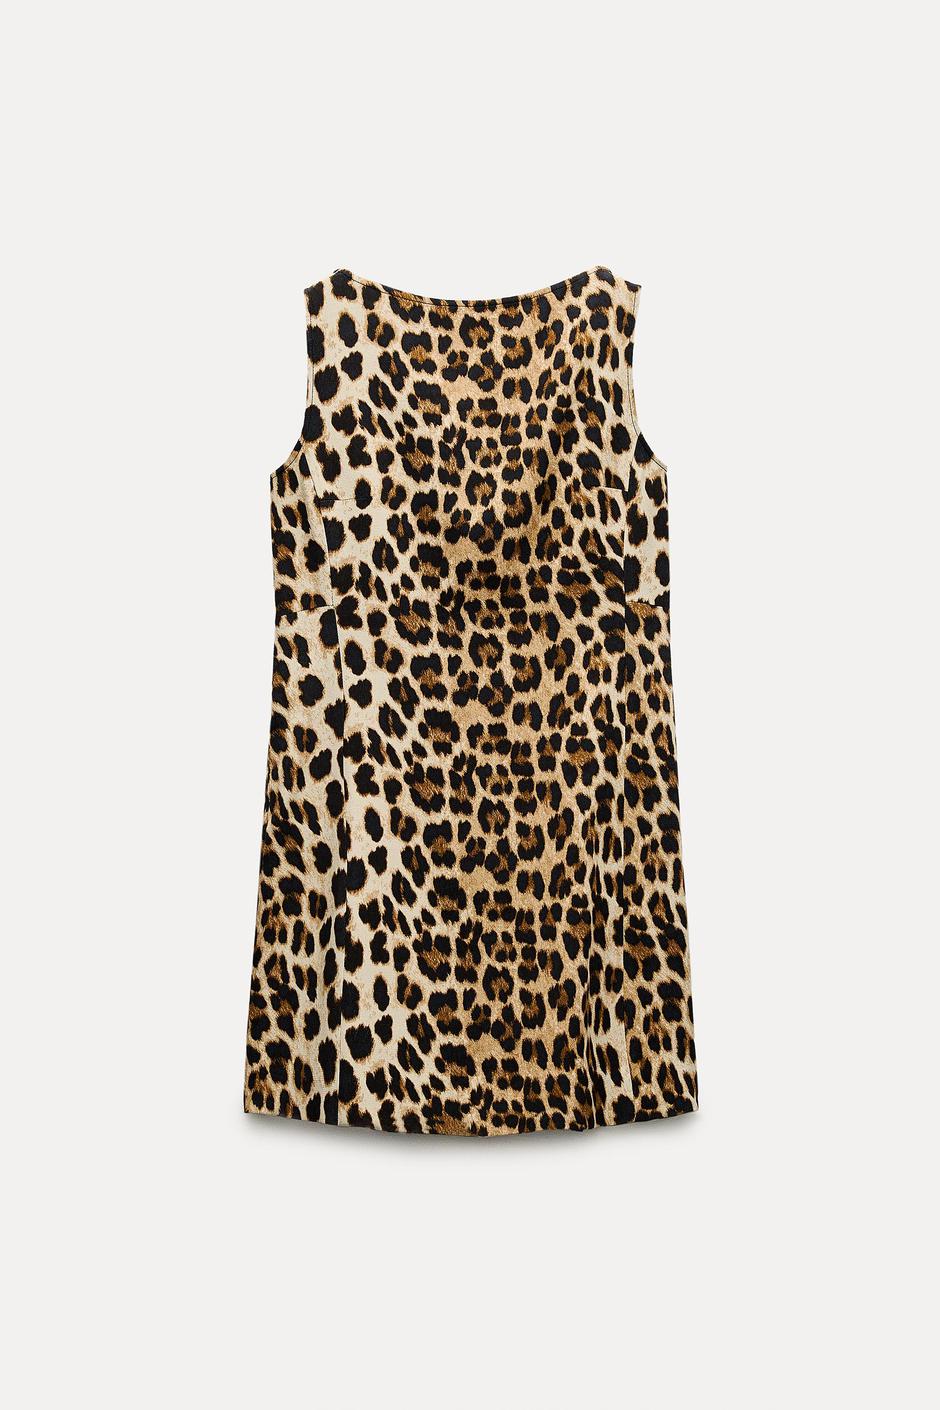 Foto: Zara, leopard mini haljina | Autor: Zara